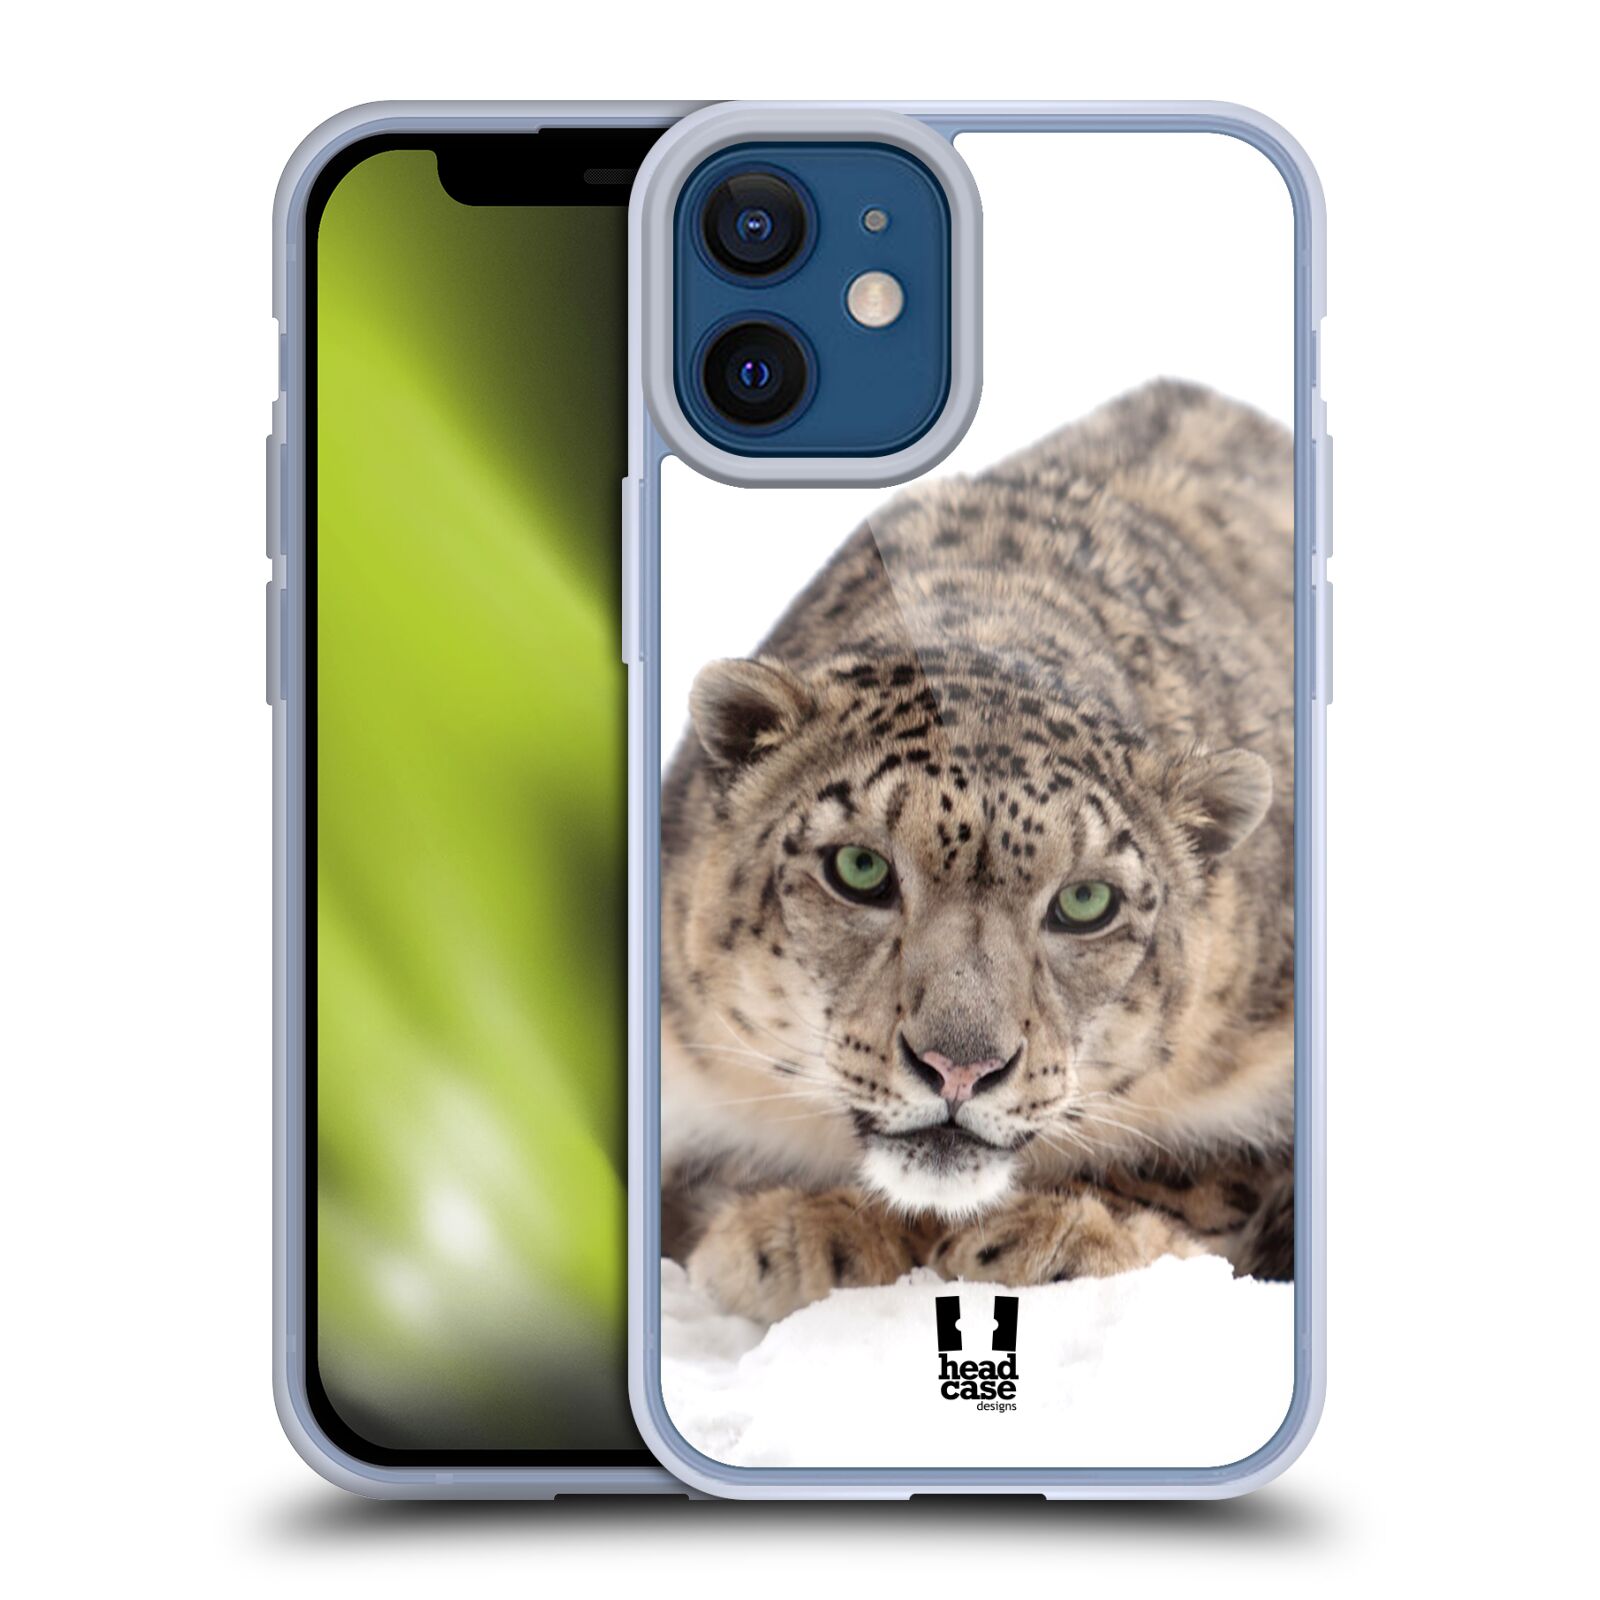 Plastový obal na mobil Apple Iphone 12 MINI vzor Divočina, Divoký život a zvířata foto SNĚŽNÝ LEOPARD